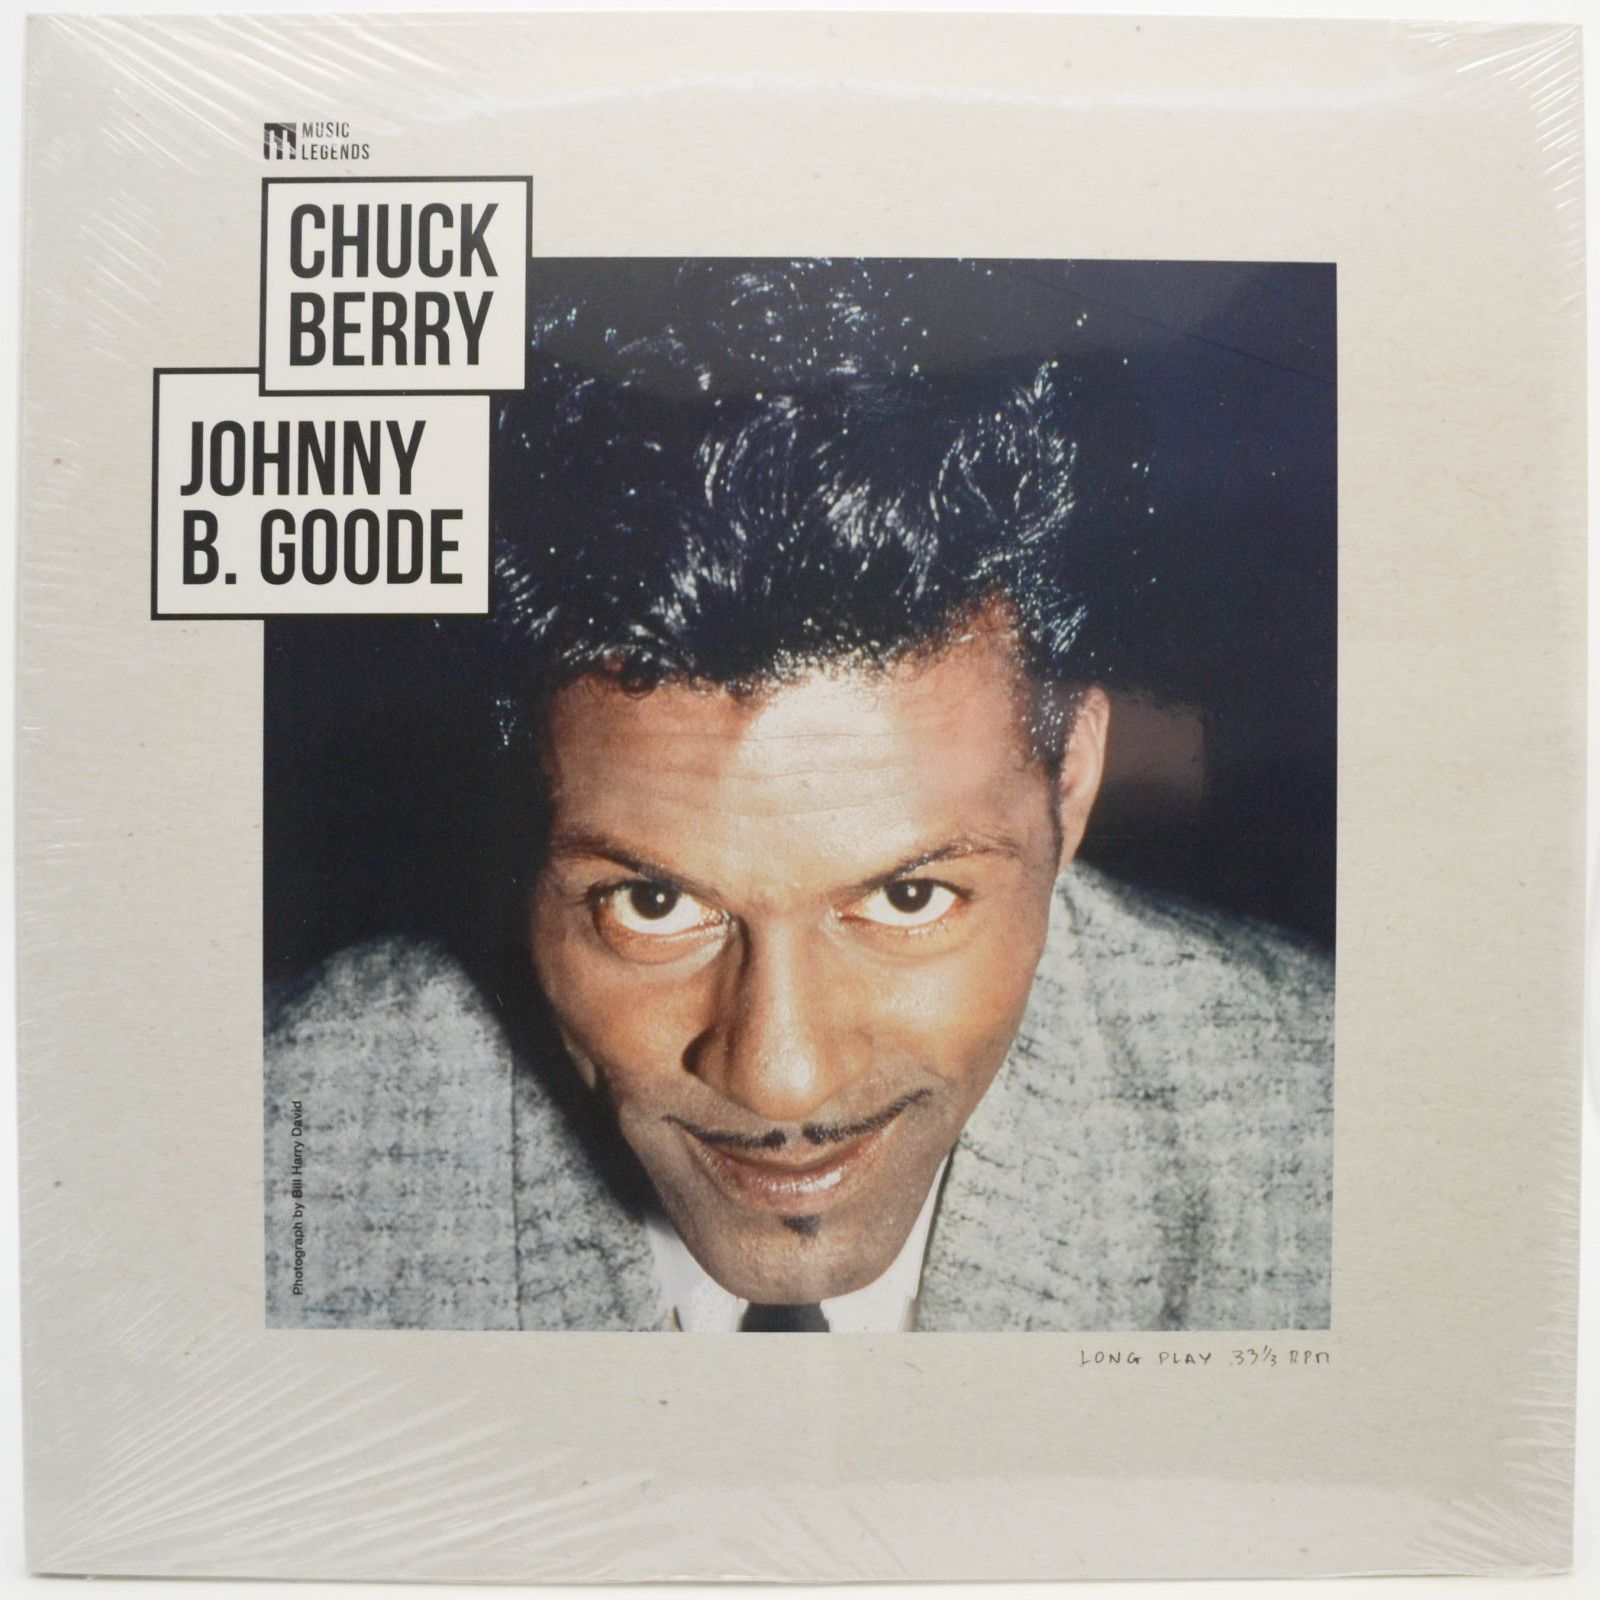 Chuck Berry — Johnny B. Goode, 2018